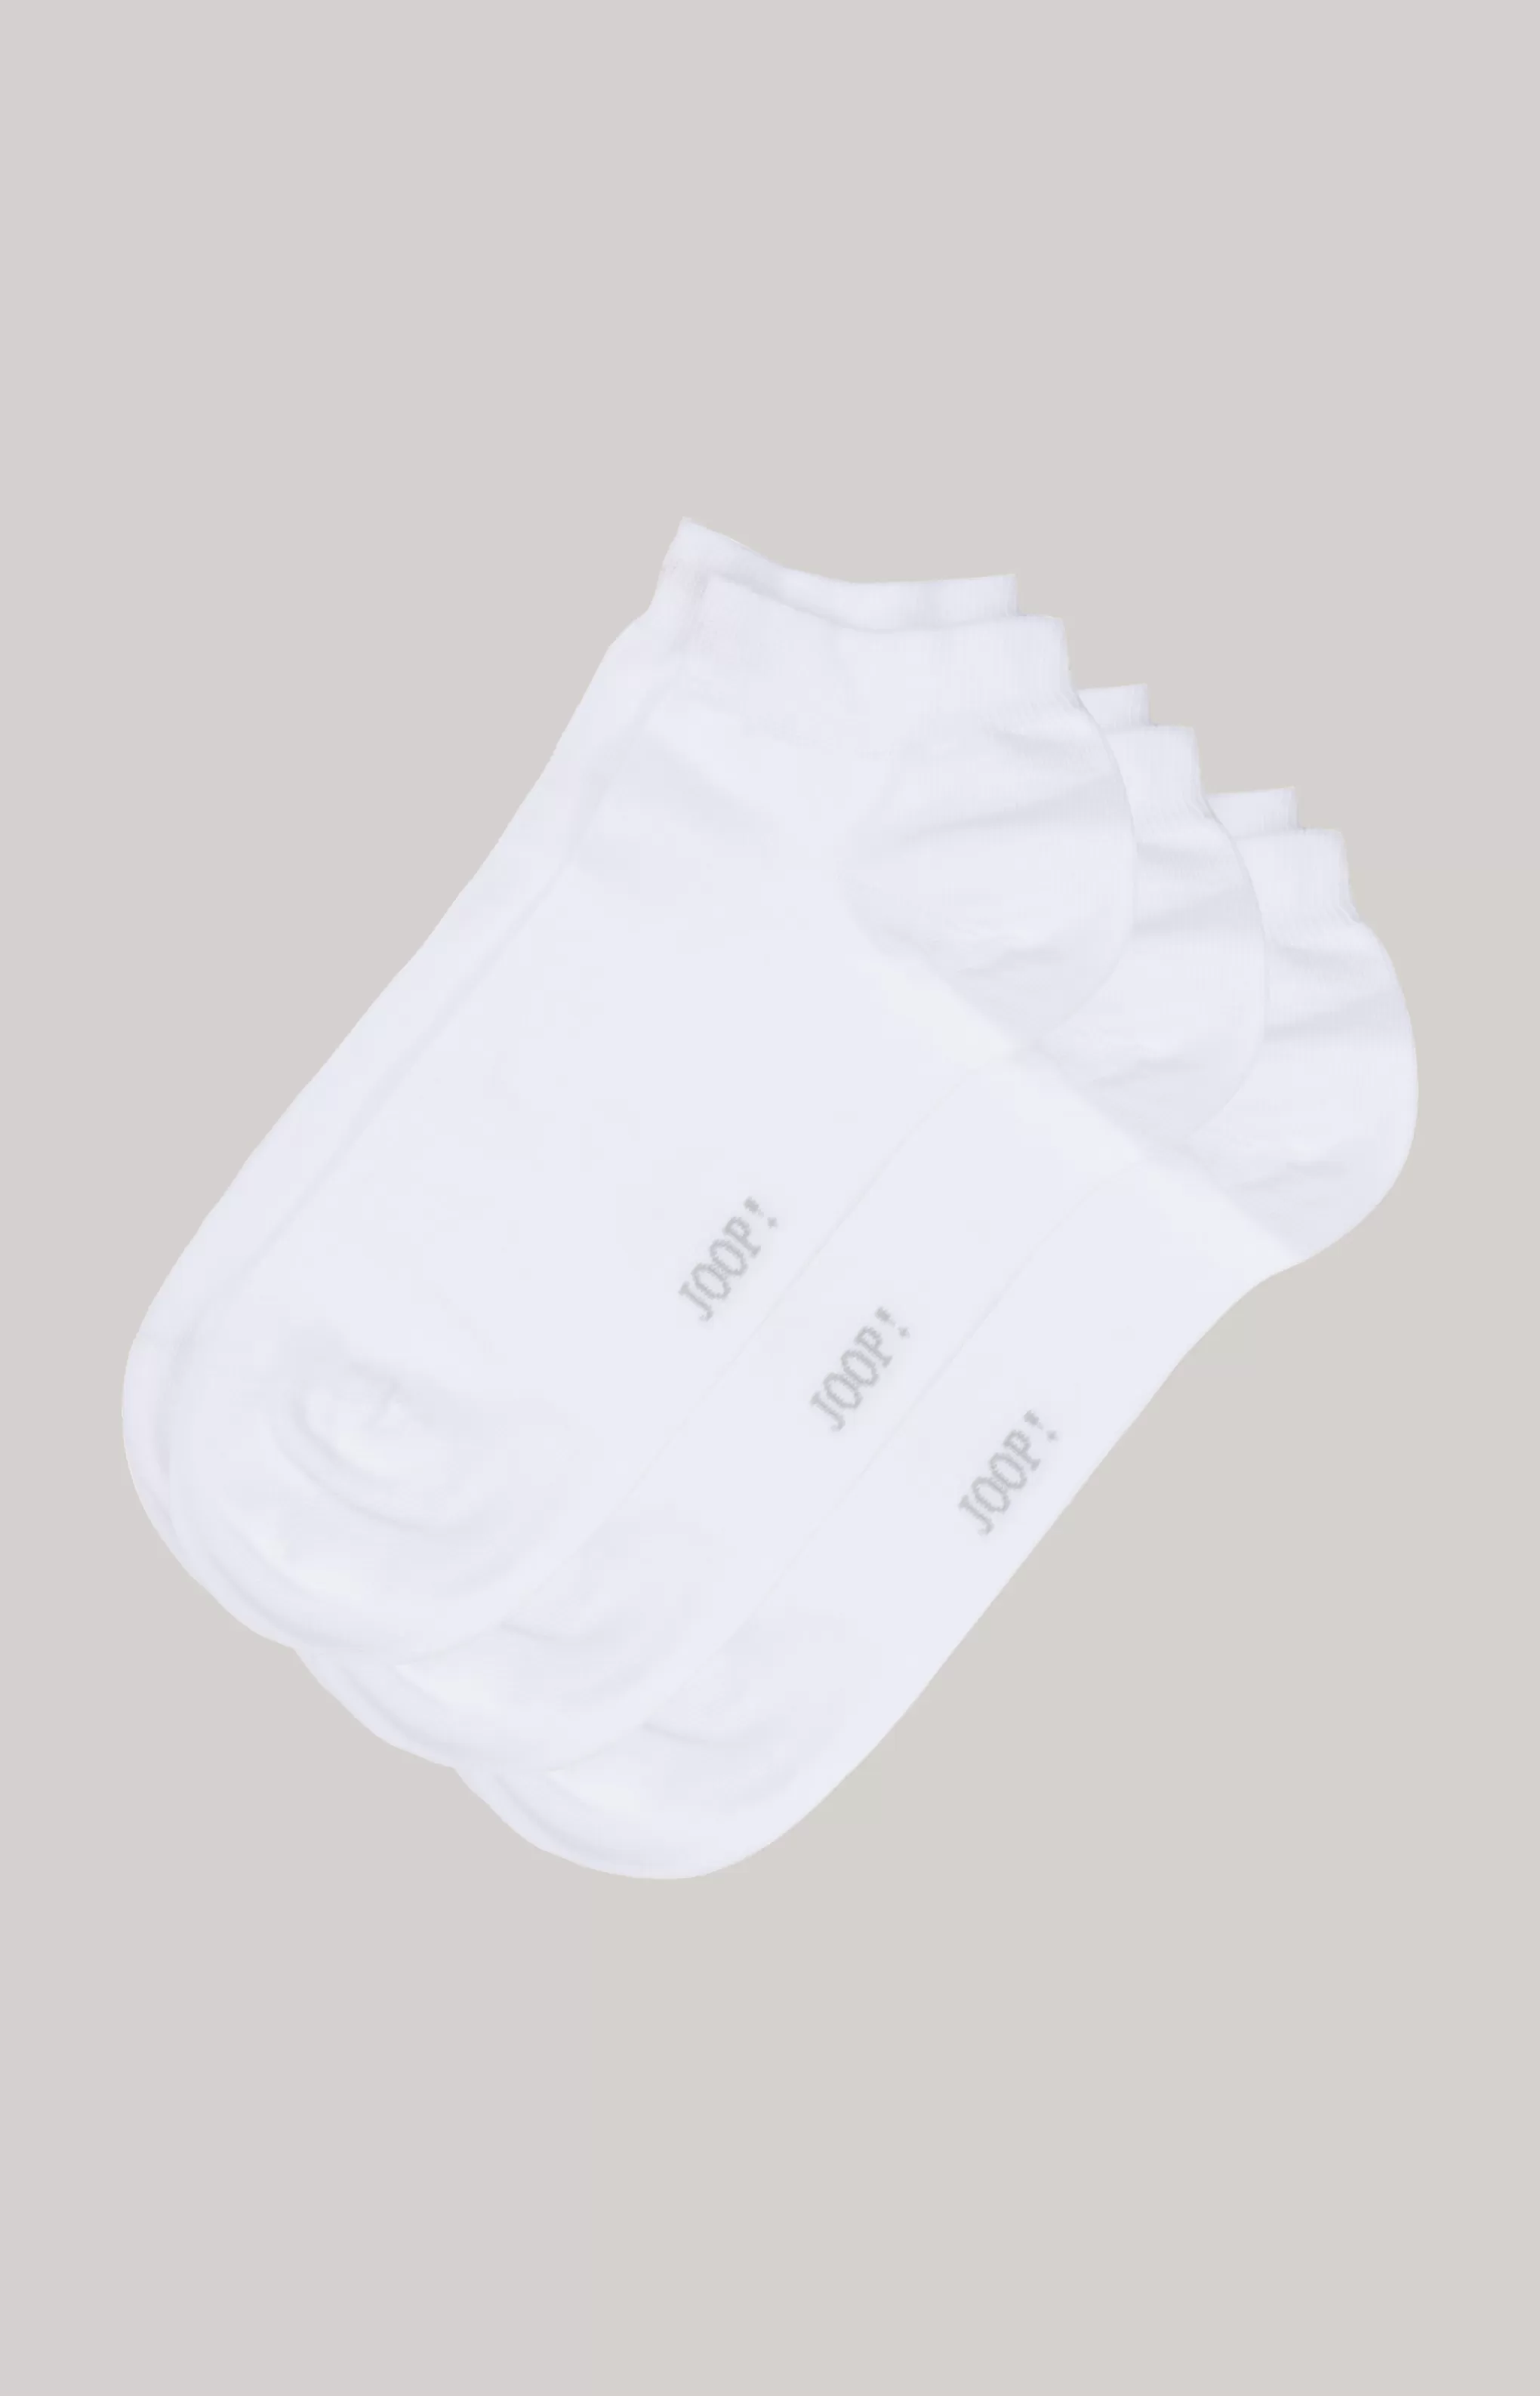 Socks*JOOP Socks 3-pack of trainer socks in